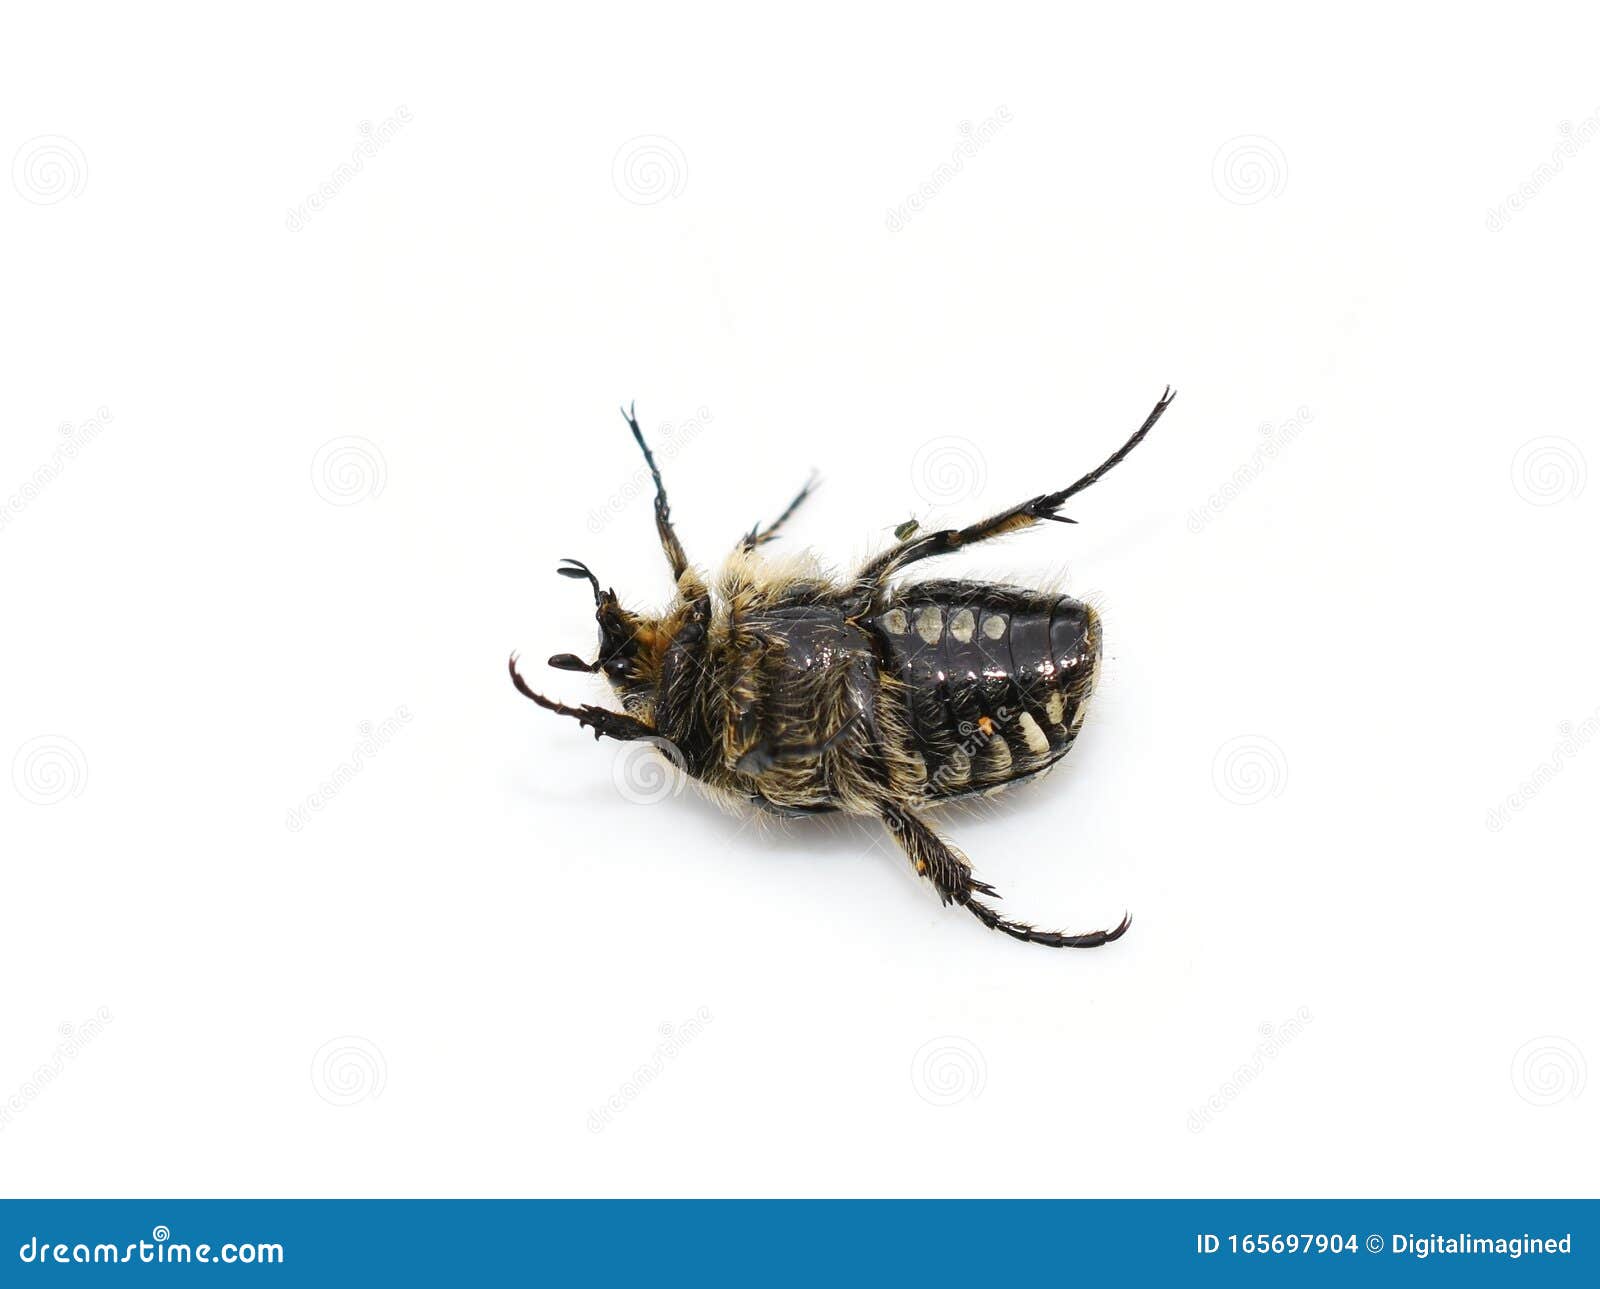 oxythyrea funesta flower scarab beetle underside